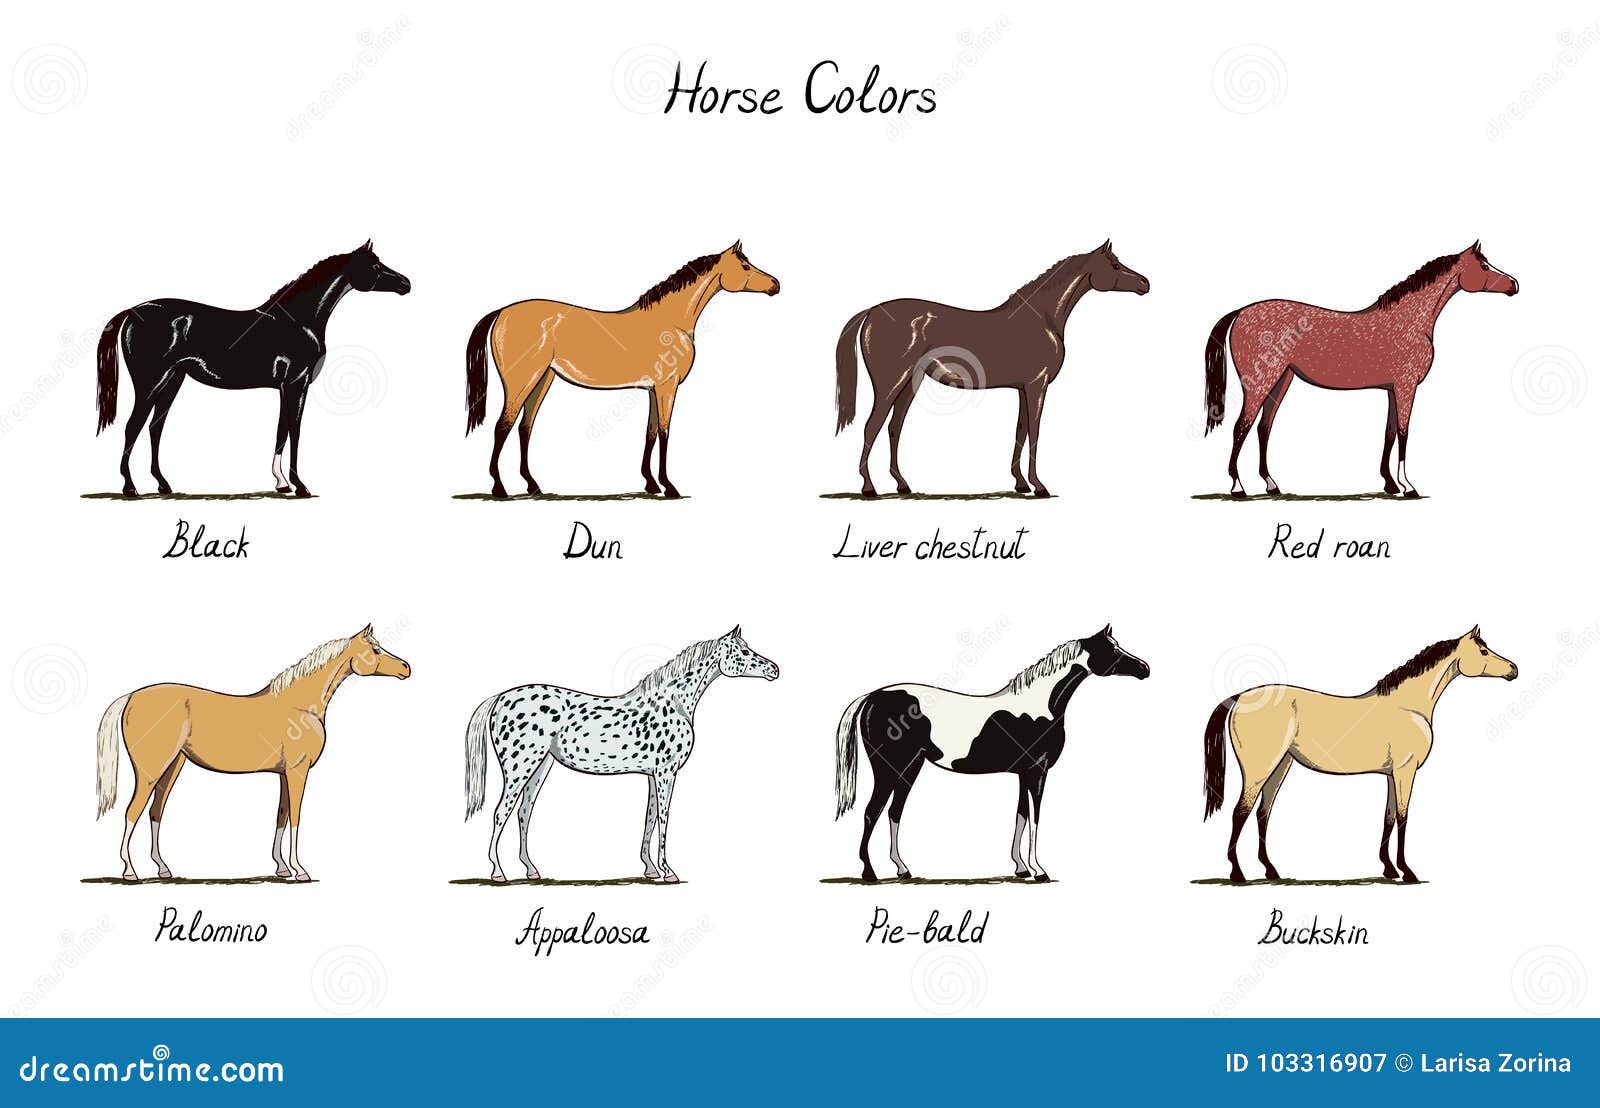 Как зовут лошадку. Цвета лошадей. Какого цвета лошадь. Цвета лошадей названия. Окрасы лошадей.